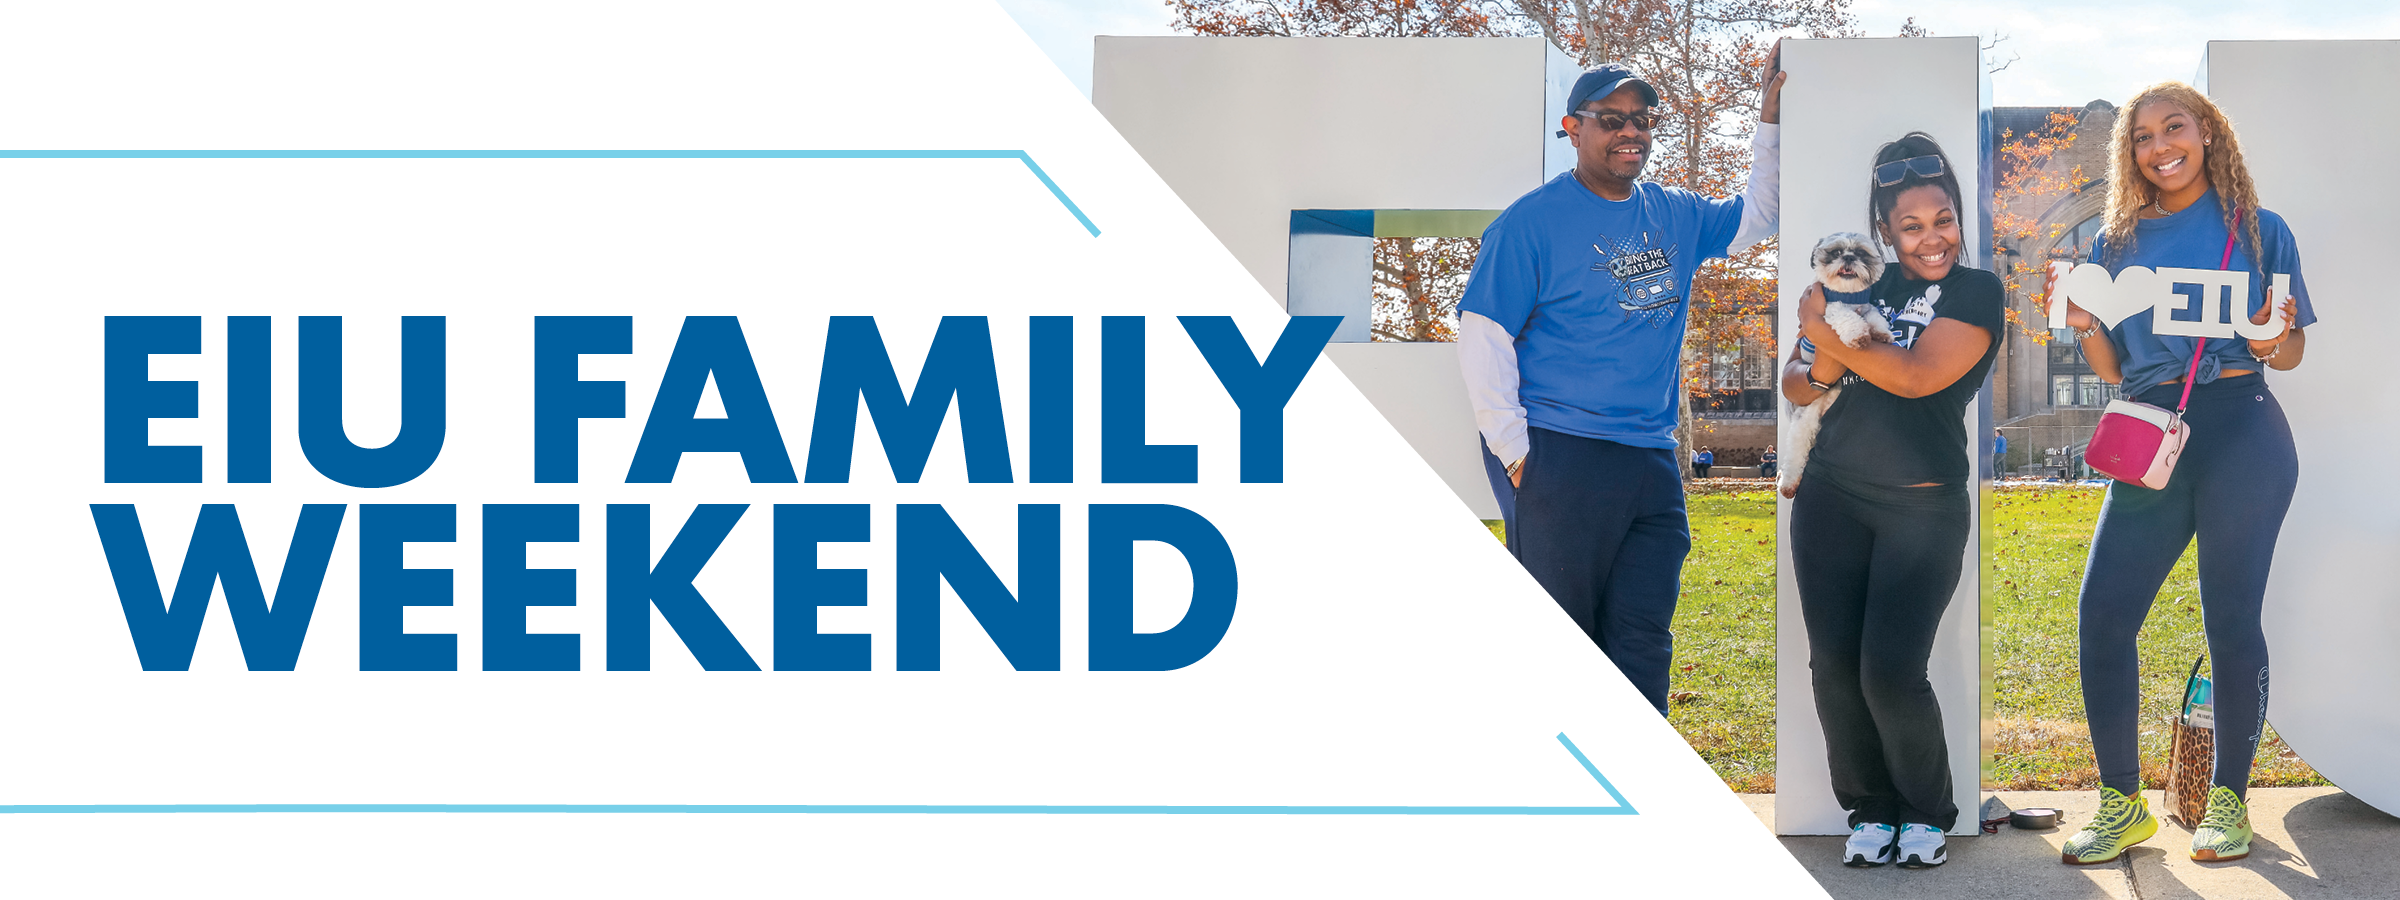 Family Weekend Rock ‘N’ Bowl Calendar Eastern Illinois University